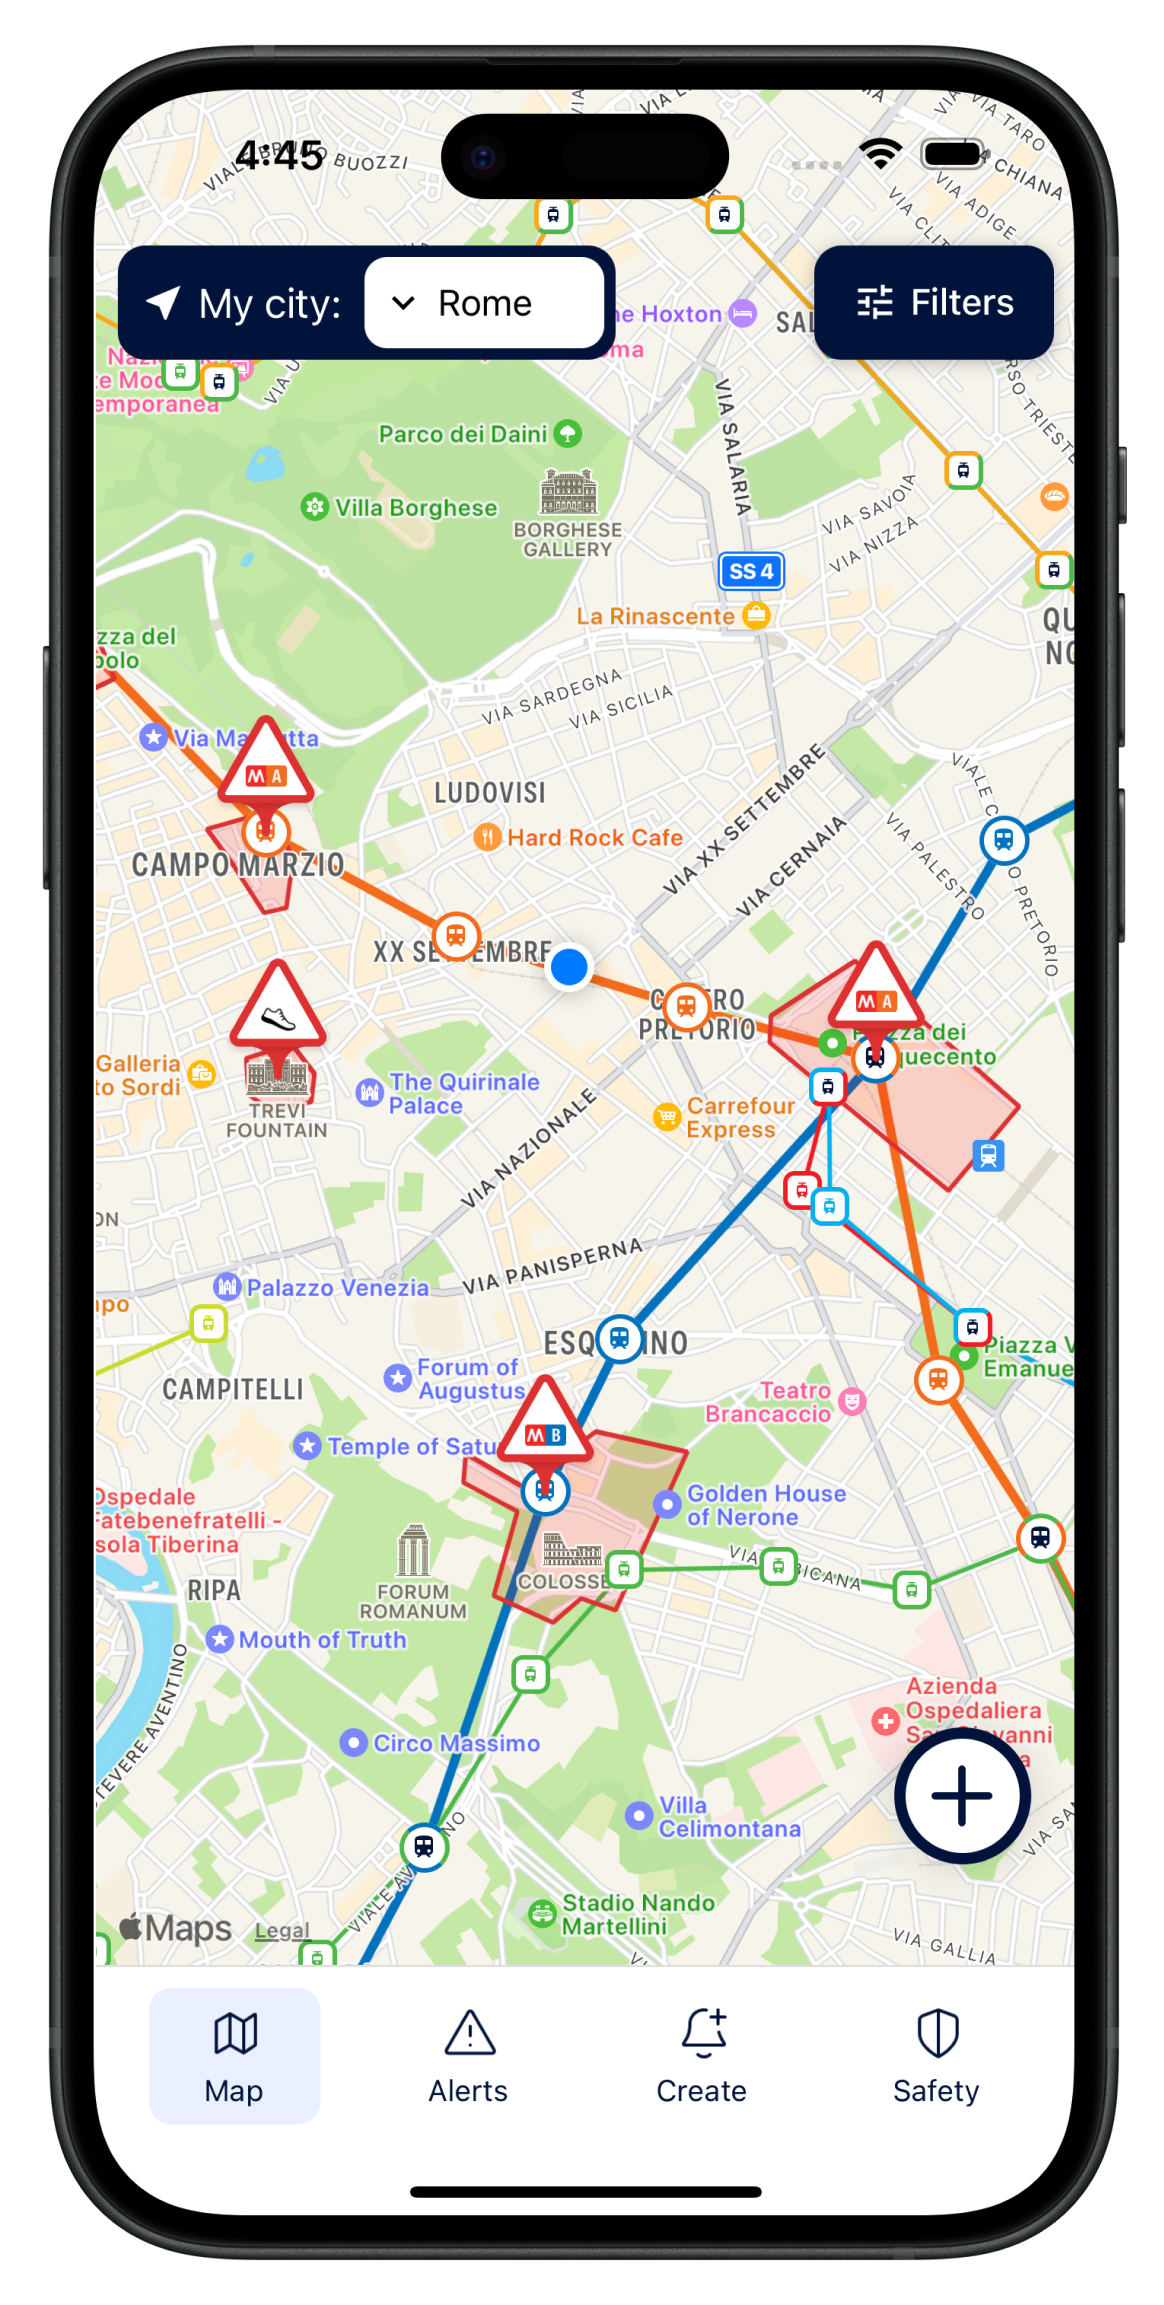 pickpocket alert app example of map